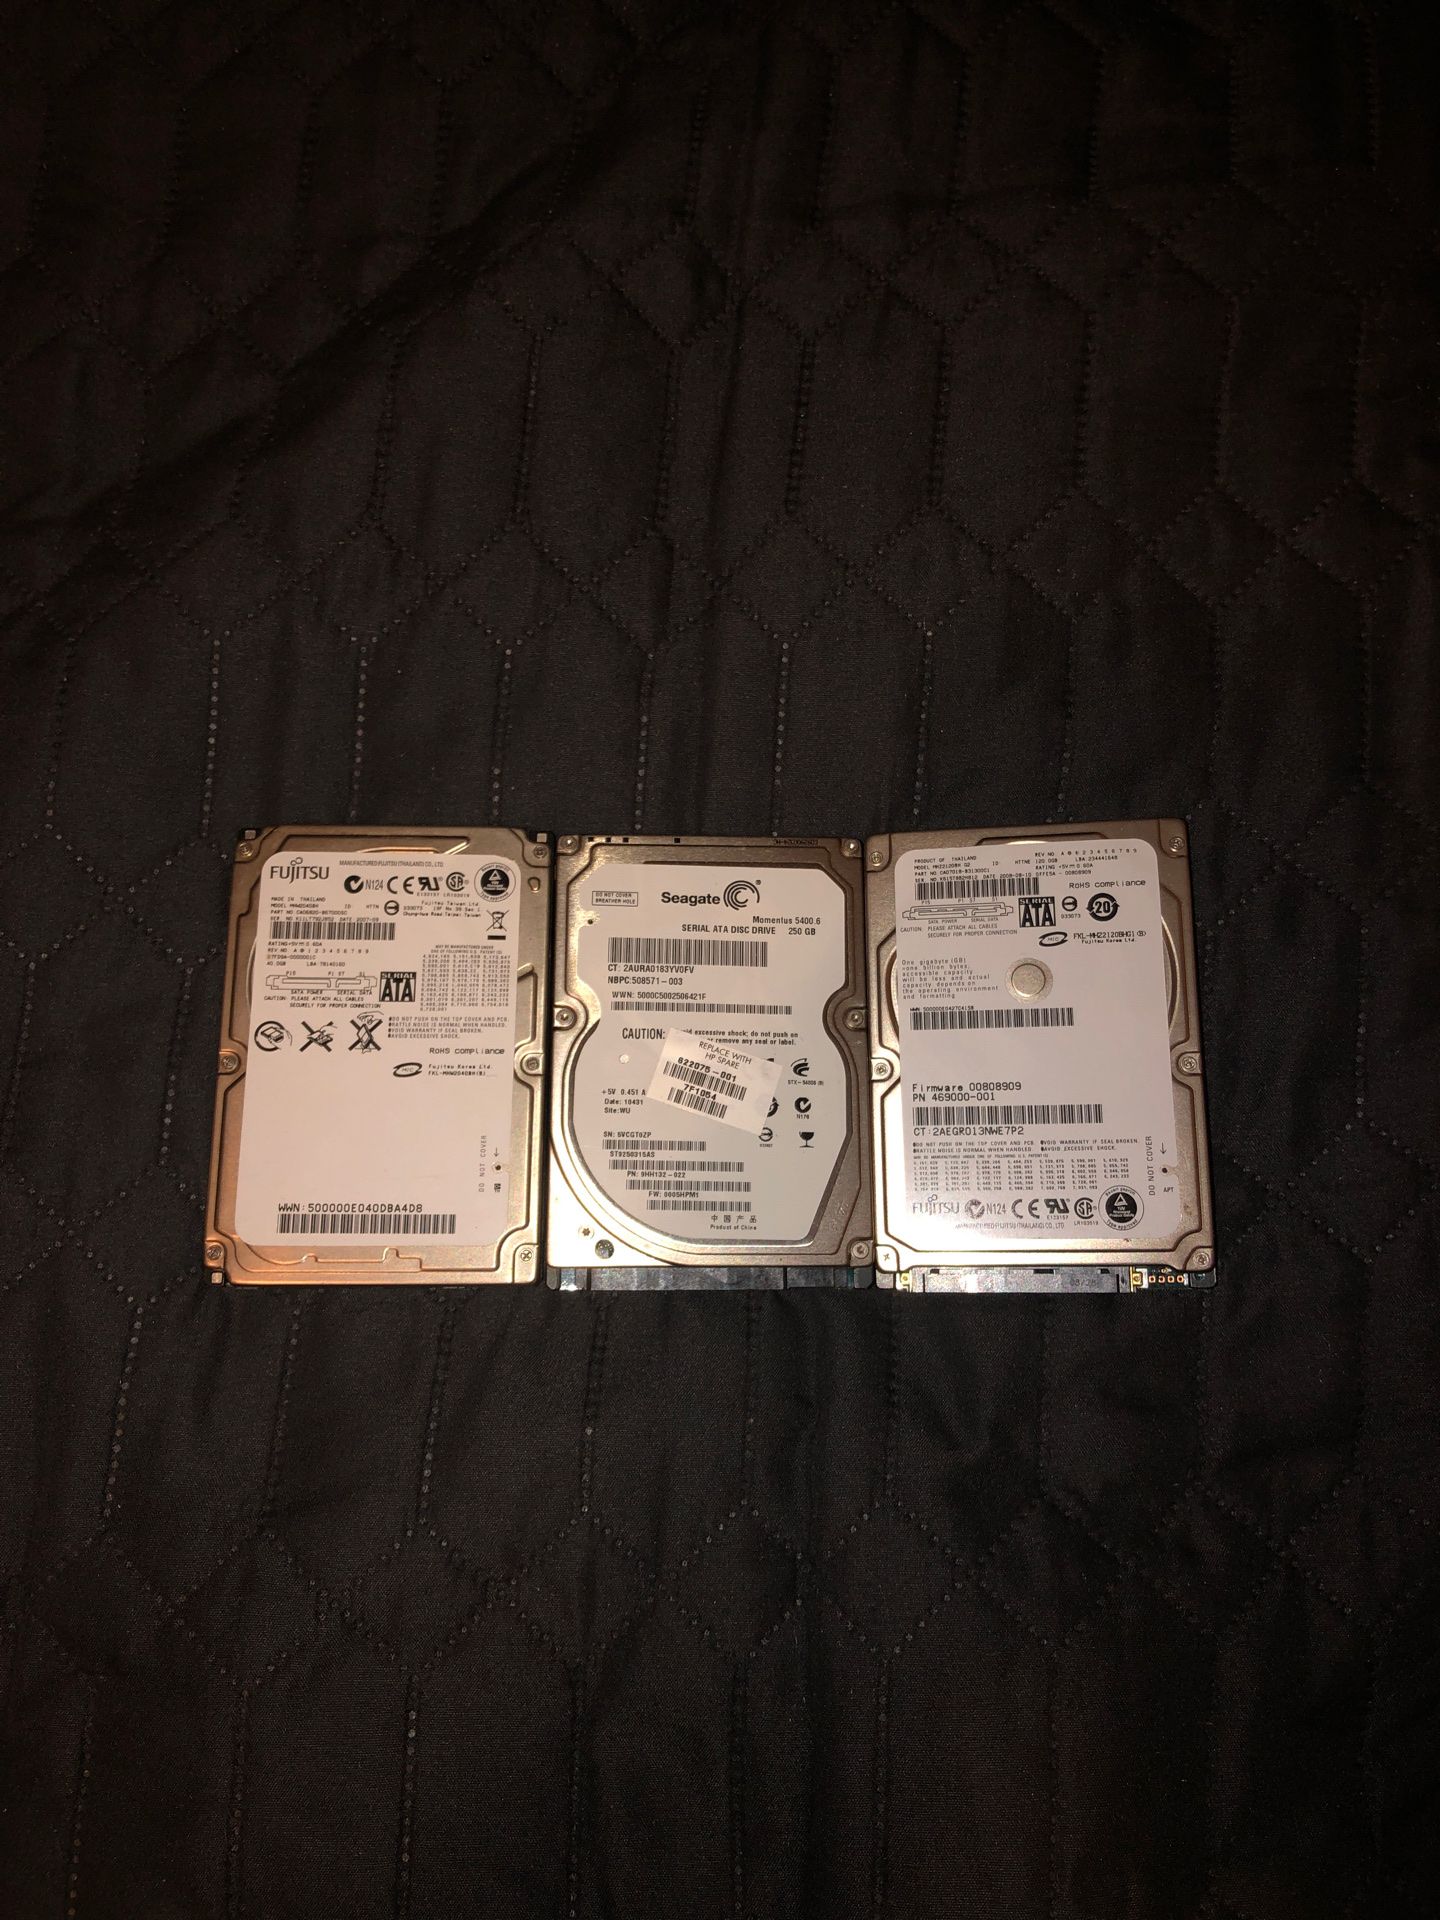 3 laptop hard drives (40gb, 250gb and 120gb)